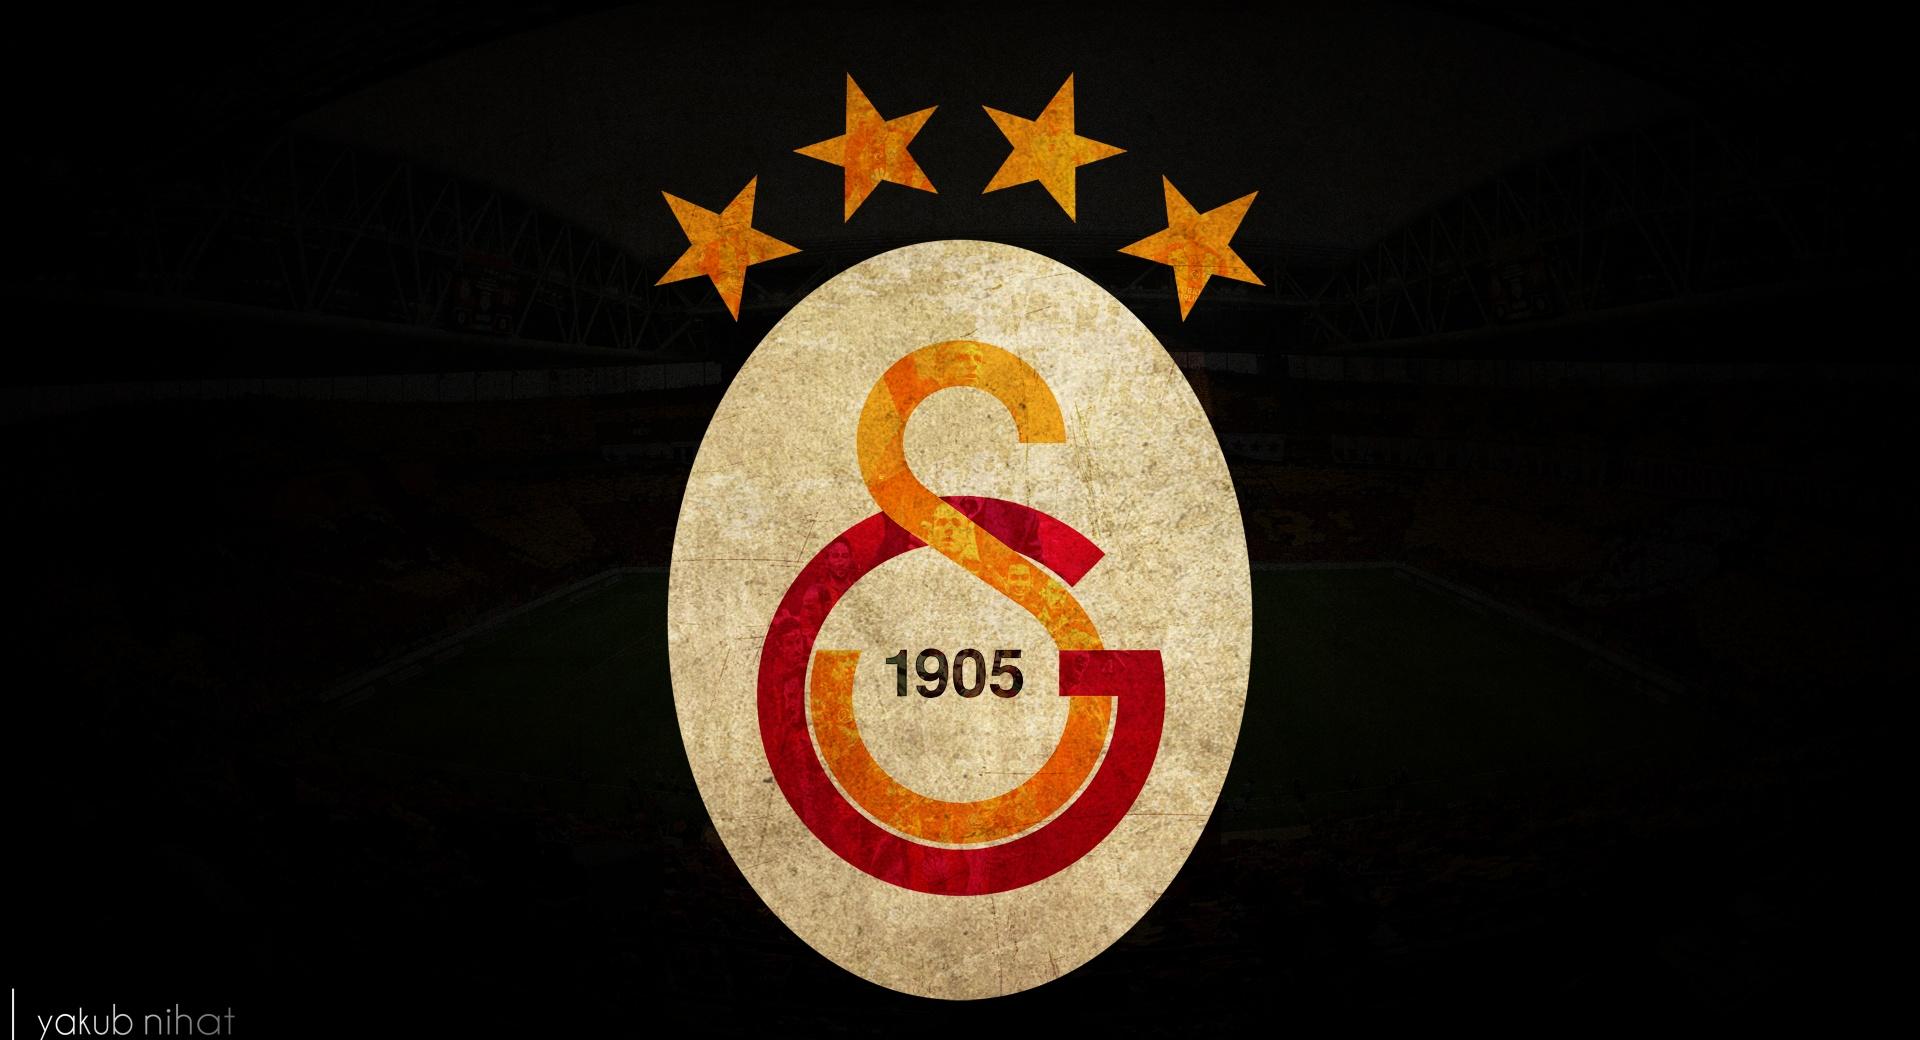 Galatasaray 2015 4K by Yakub Nihat at 1024 x 1024 iPad size wallpapers HD quality